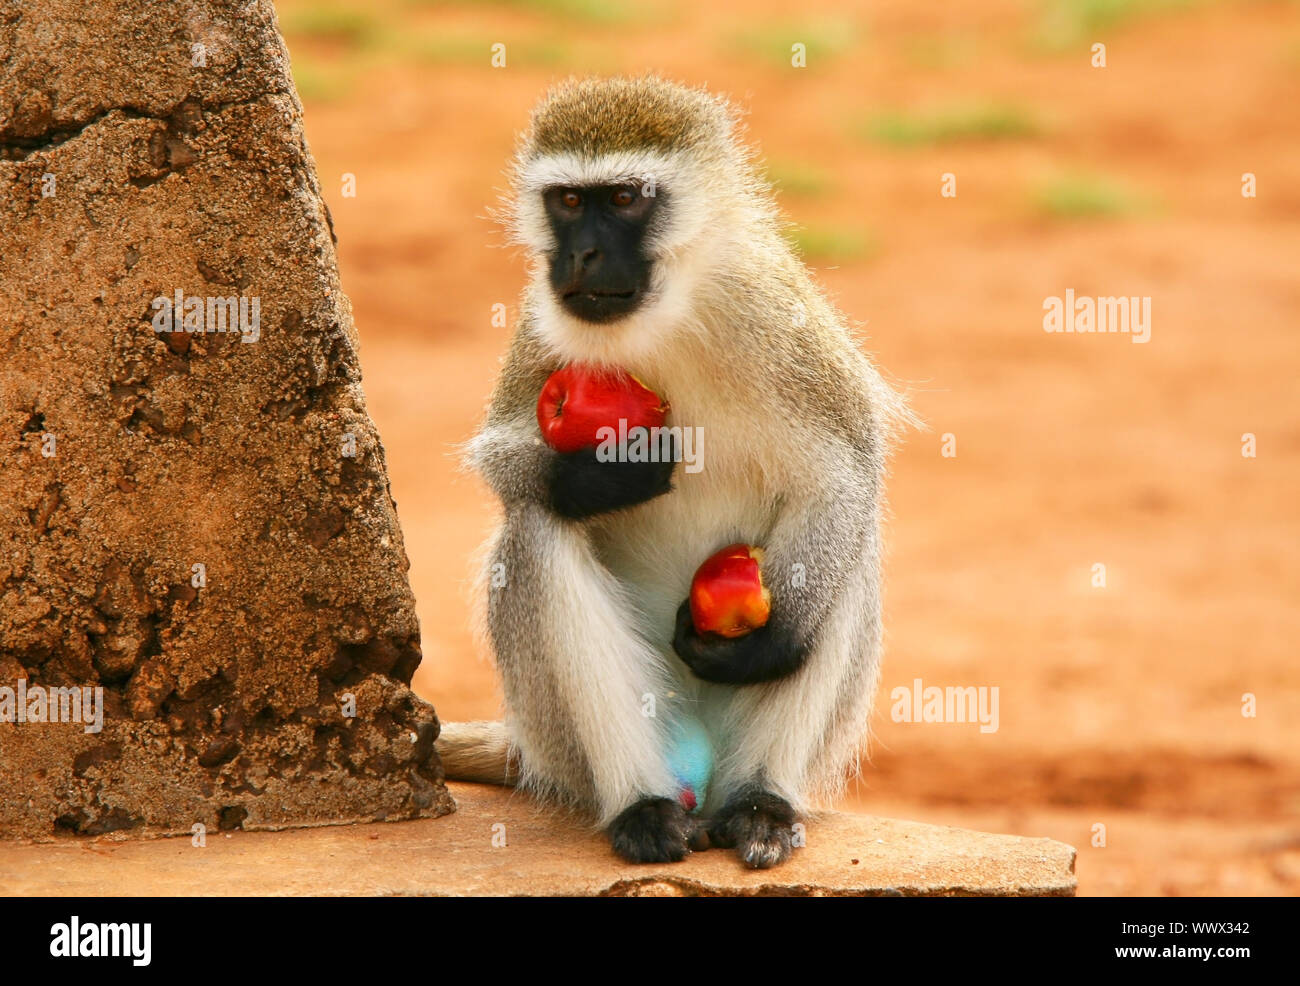 Portrait of wild hungry monkey Stock Photo